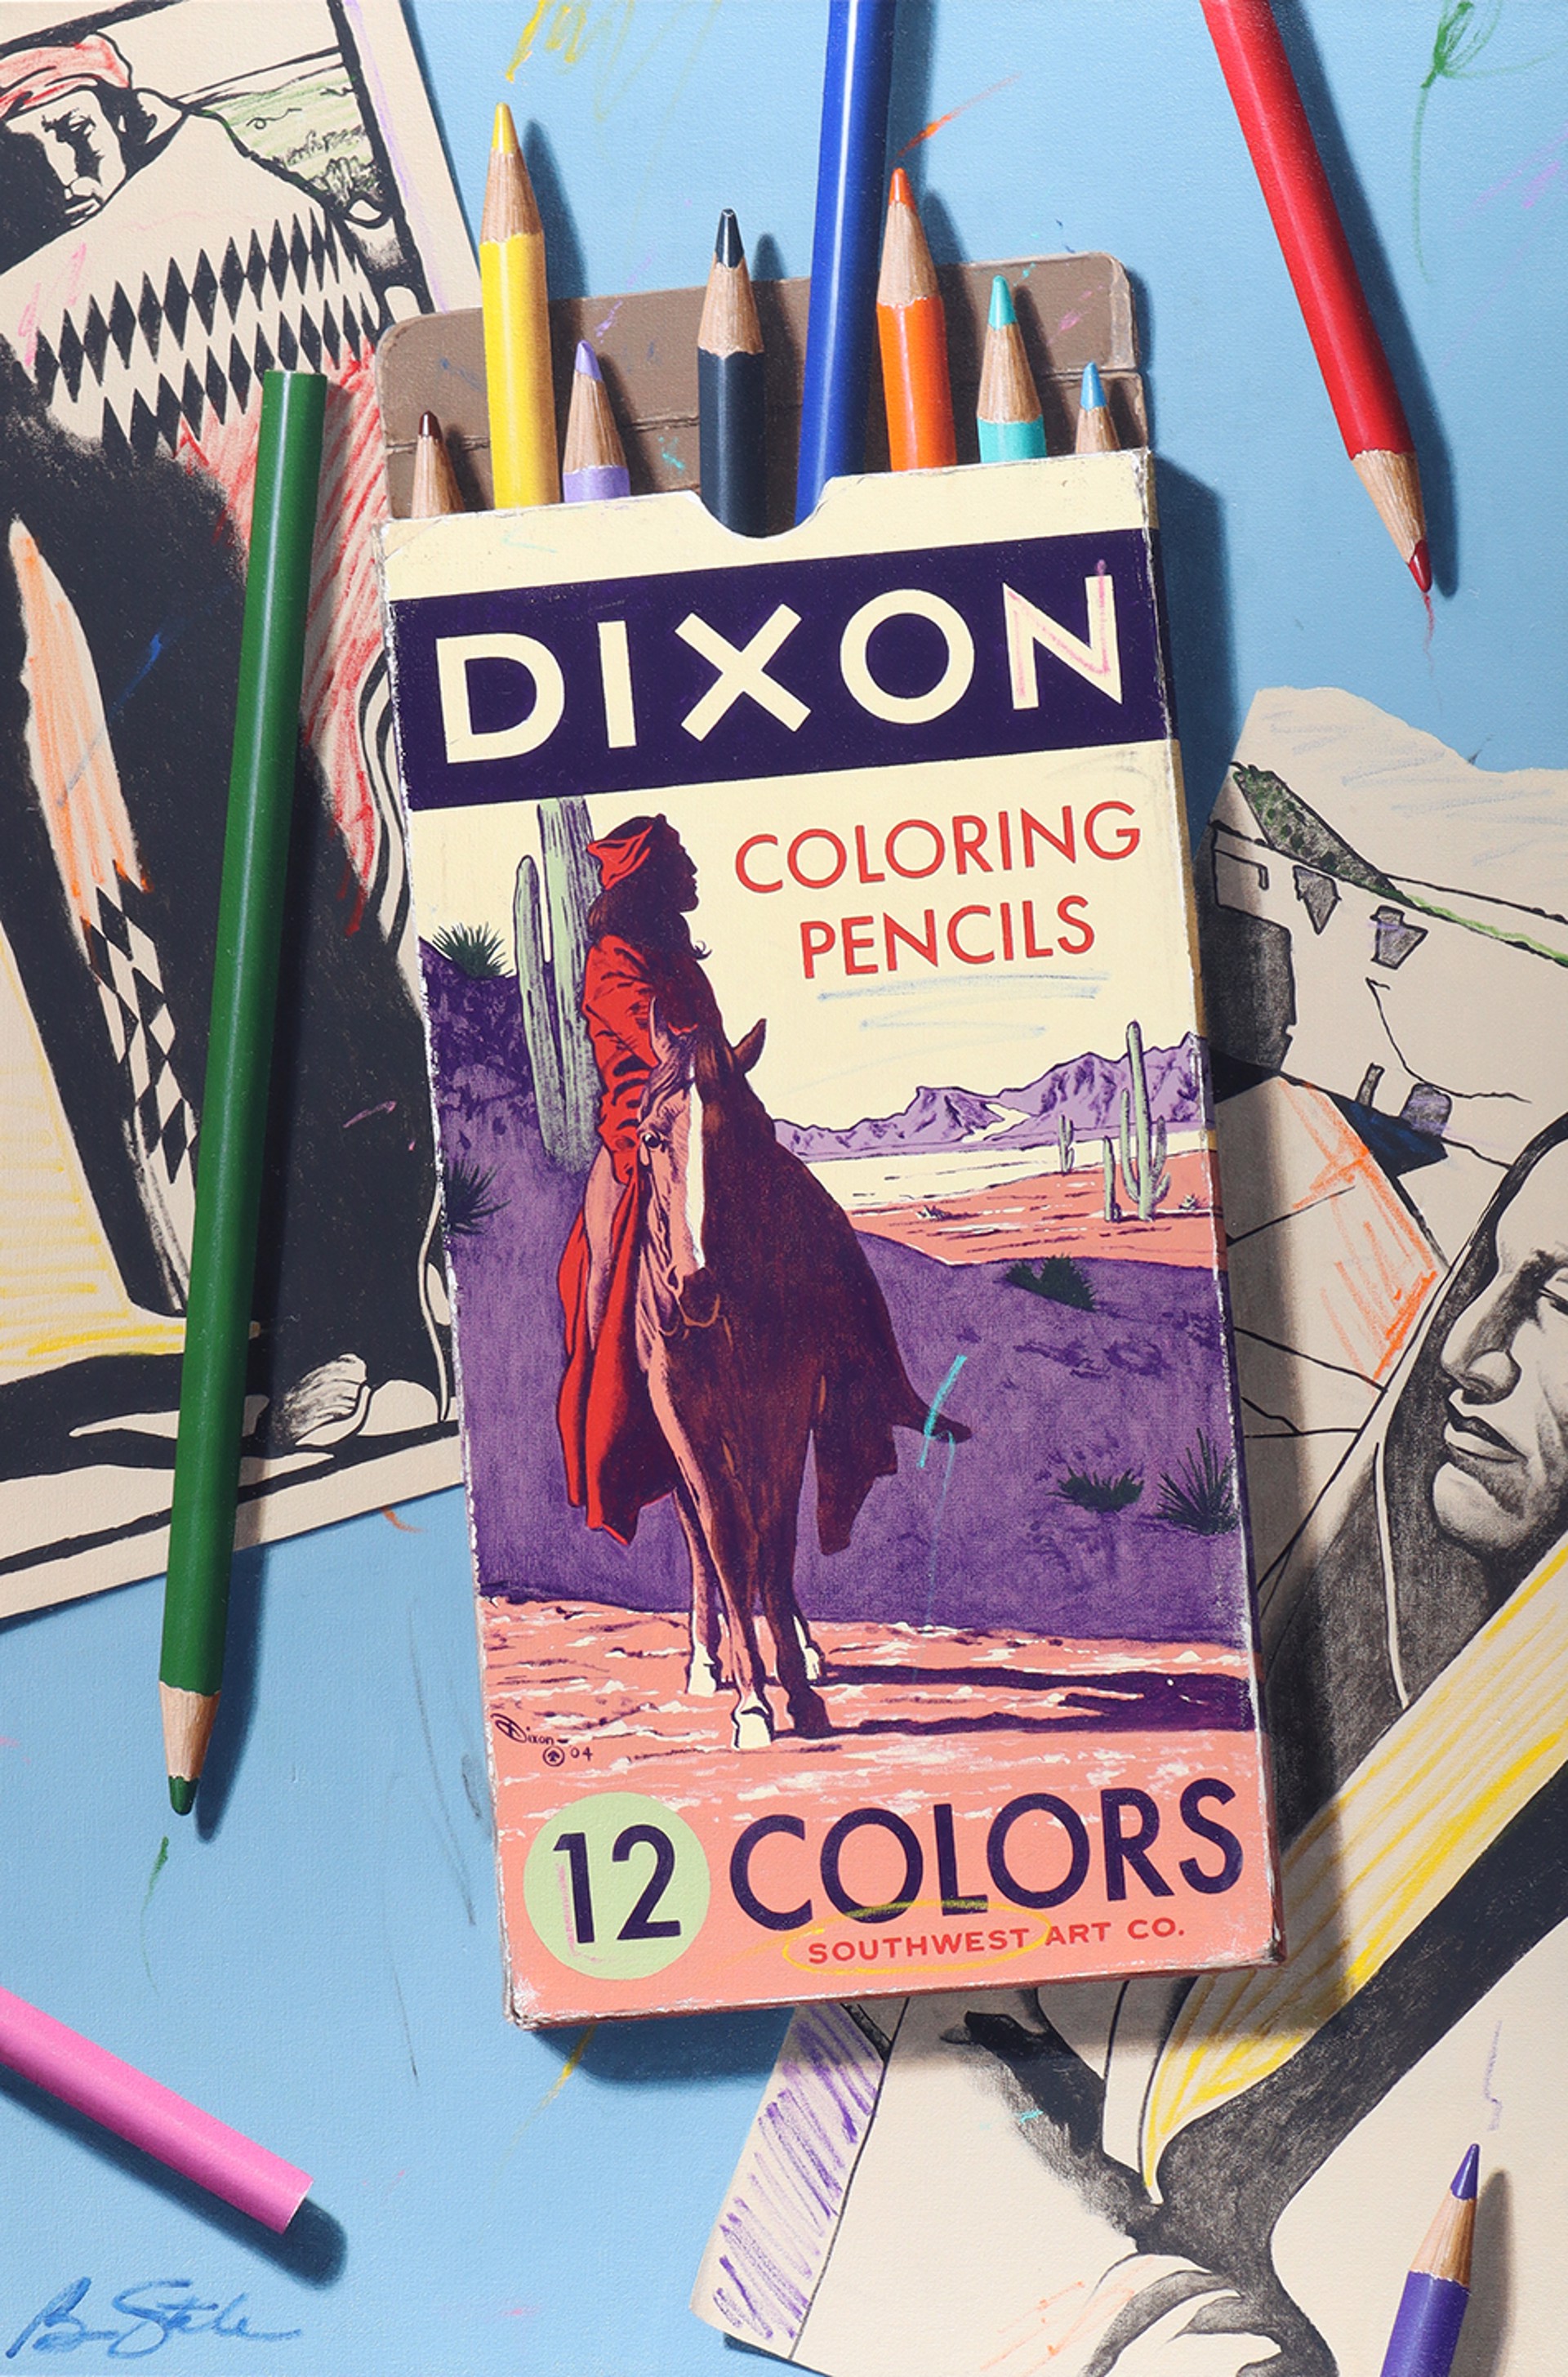 Dixon Coloring Pencils by Ben Steele